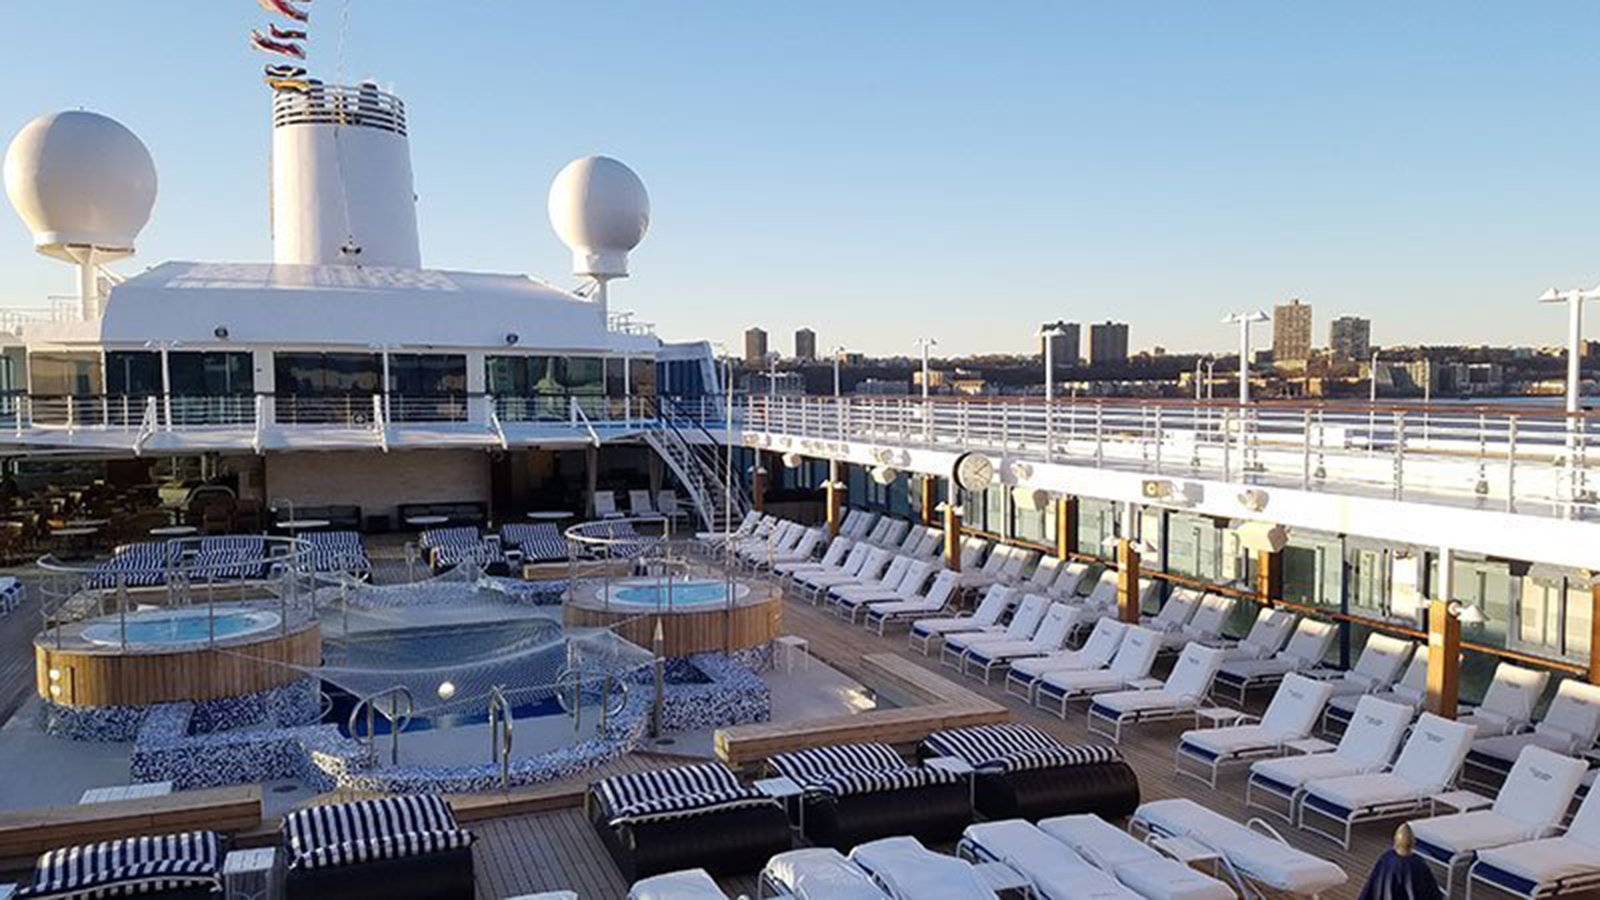 largest oceania cruise ship